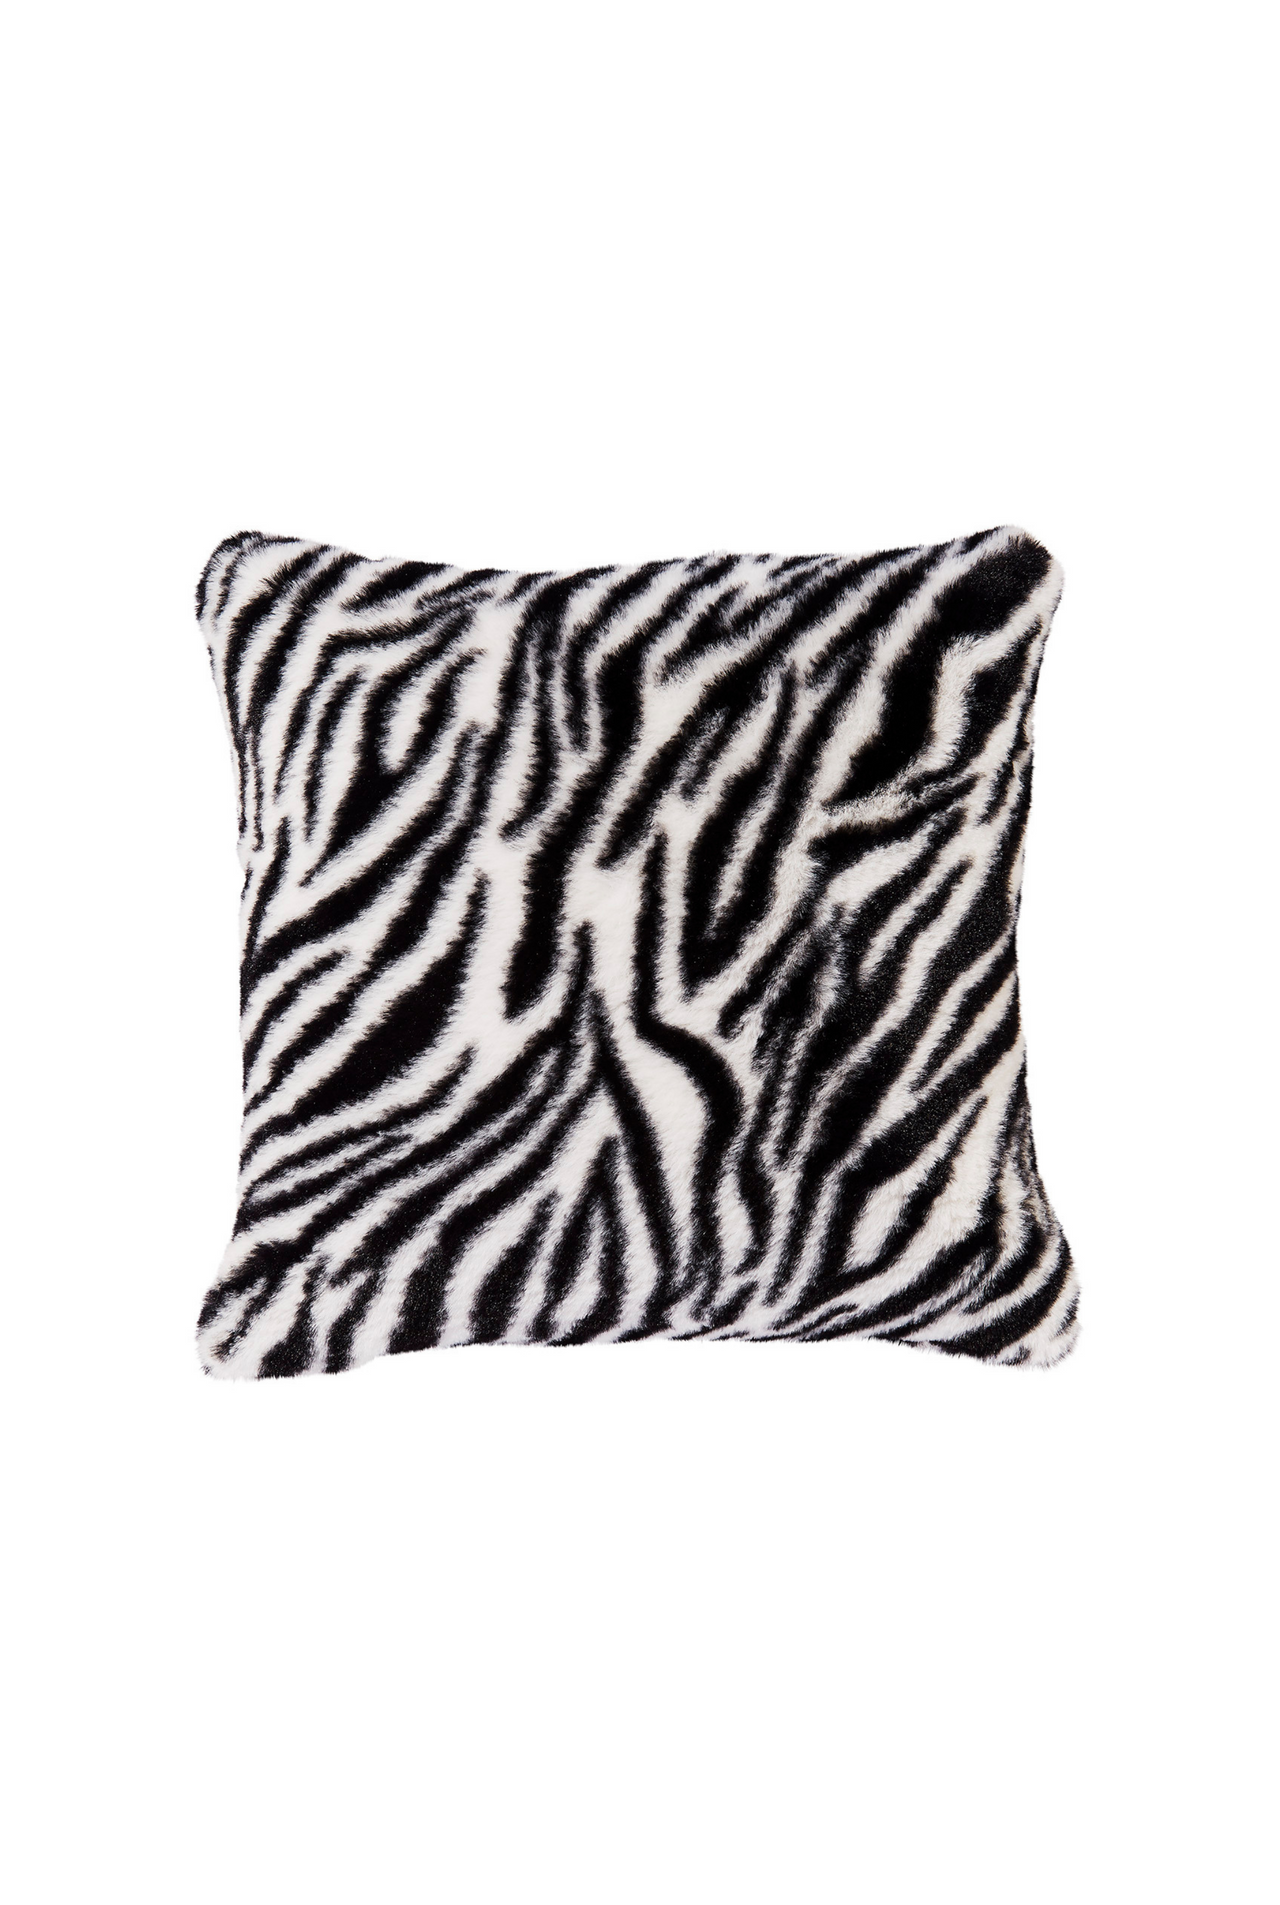 Faux fur throw pillow in zebra print.